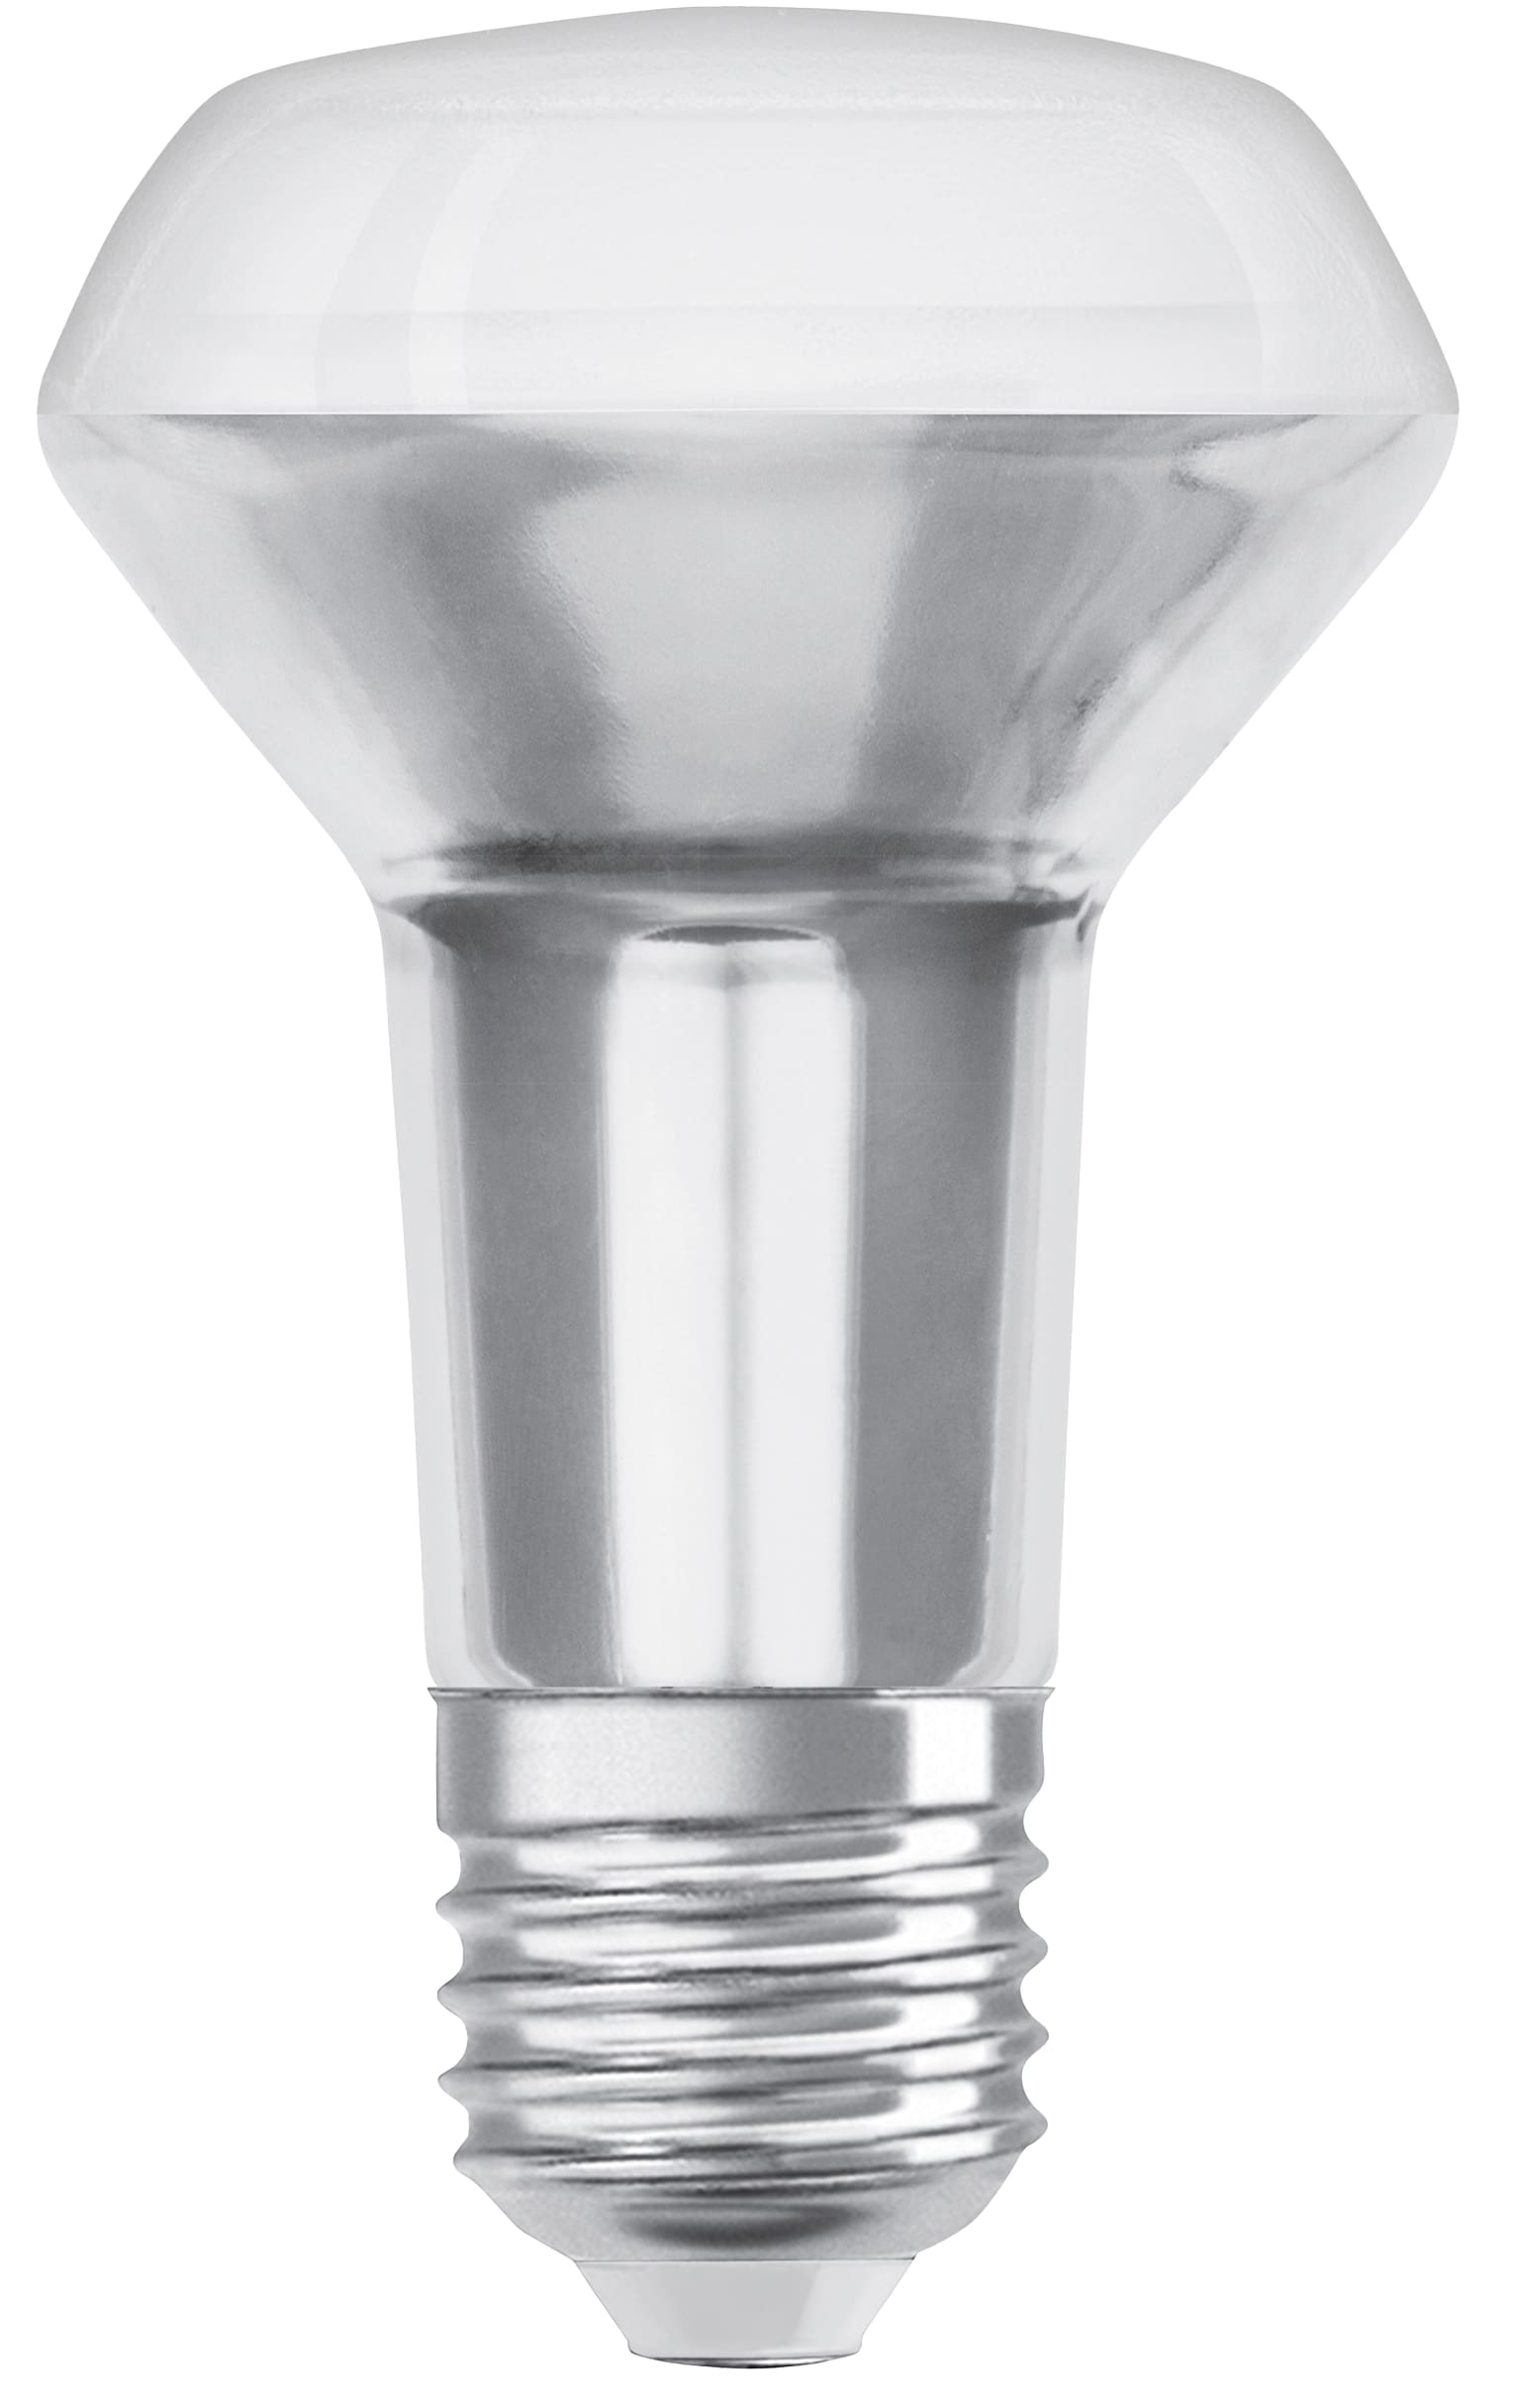 LEDVANCE LED-Reflektorlampe SST PLUS SPOT, R63, E27, EEK: G, 4,8 W, 345 lm, 2700 K